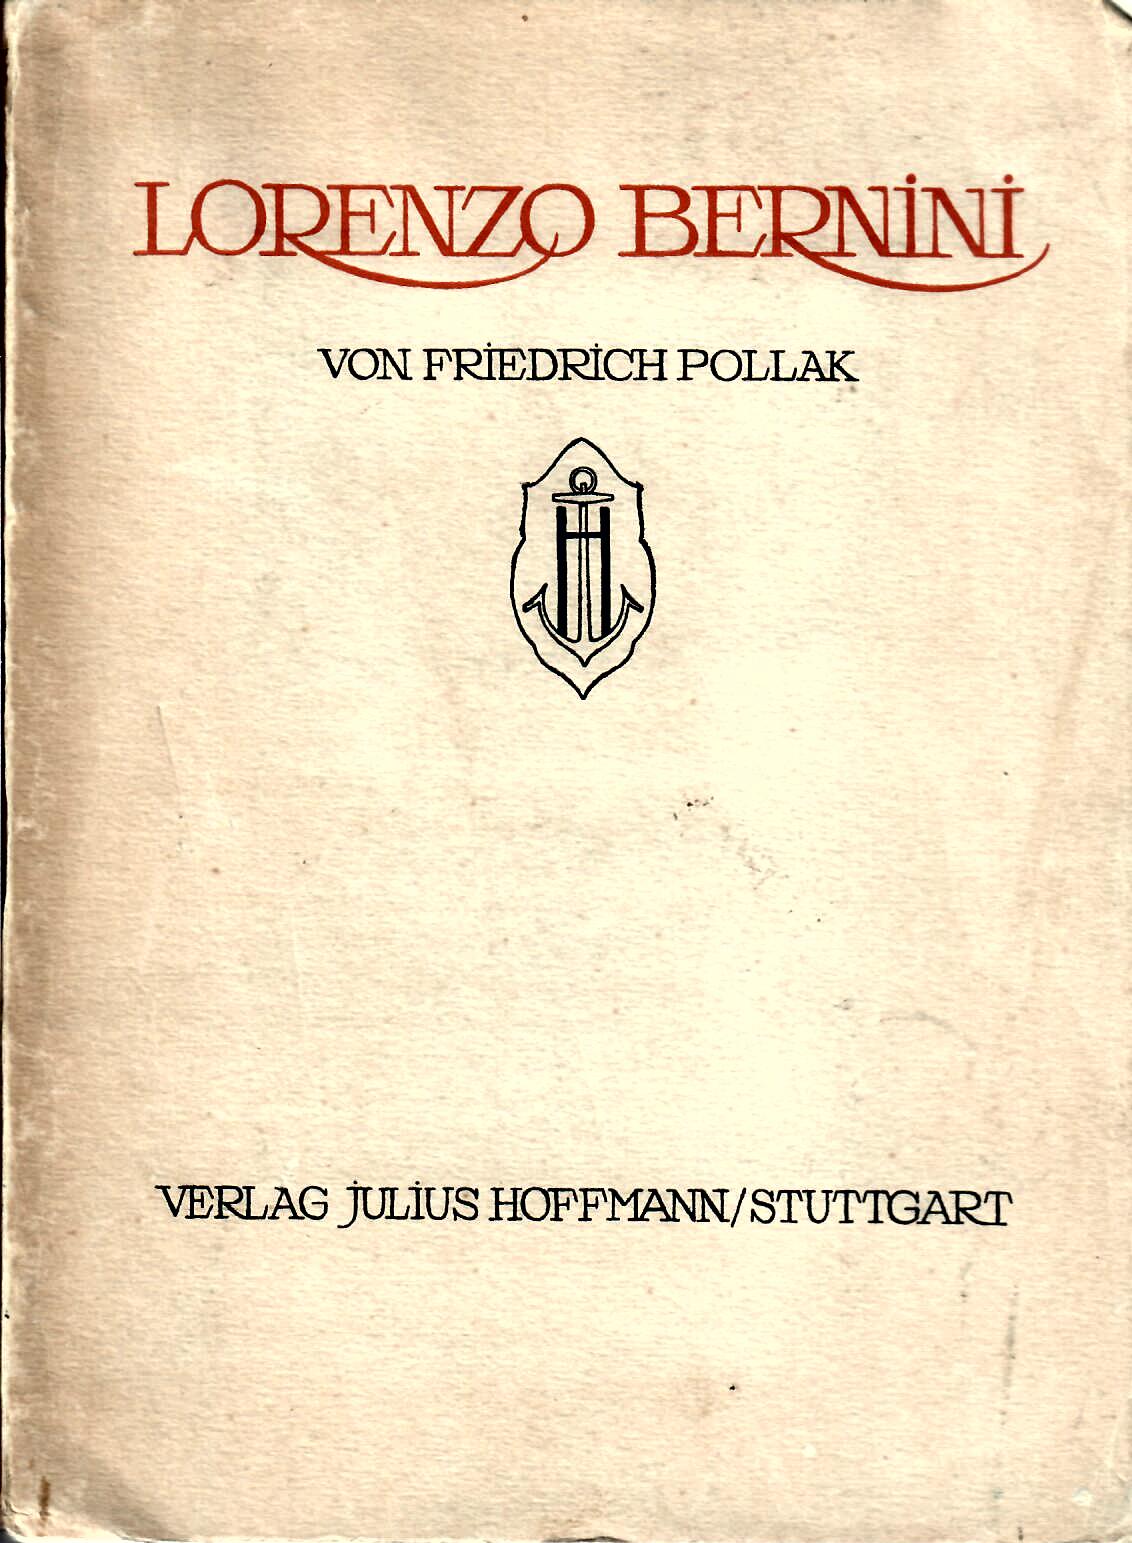 Pollak, Friedrich und Lorenzo Bernini   : Lorenzo Bernini Eine Studie von Friedrich Pollak, Verlag von Julius Hofmann Stuttgart 1919, 122 Seiten